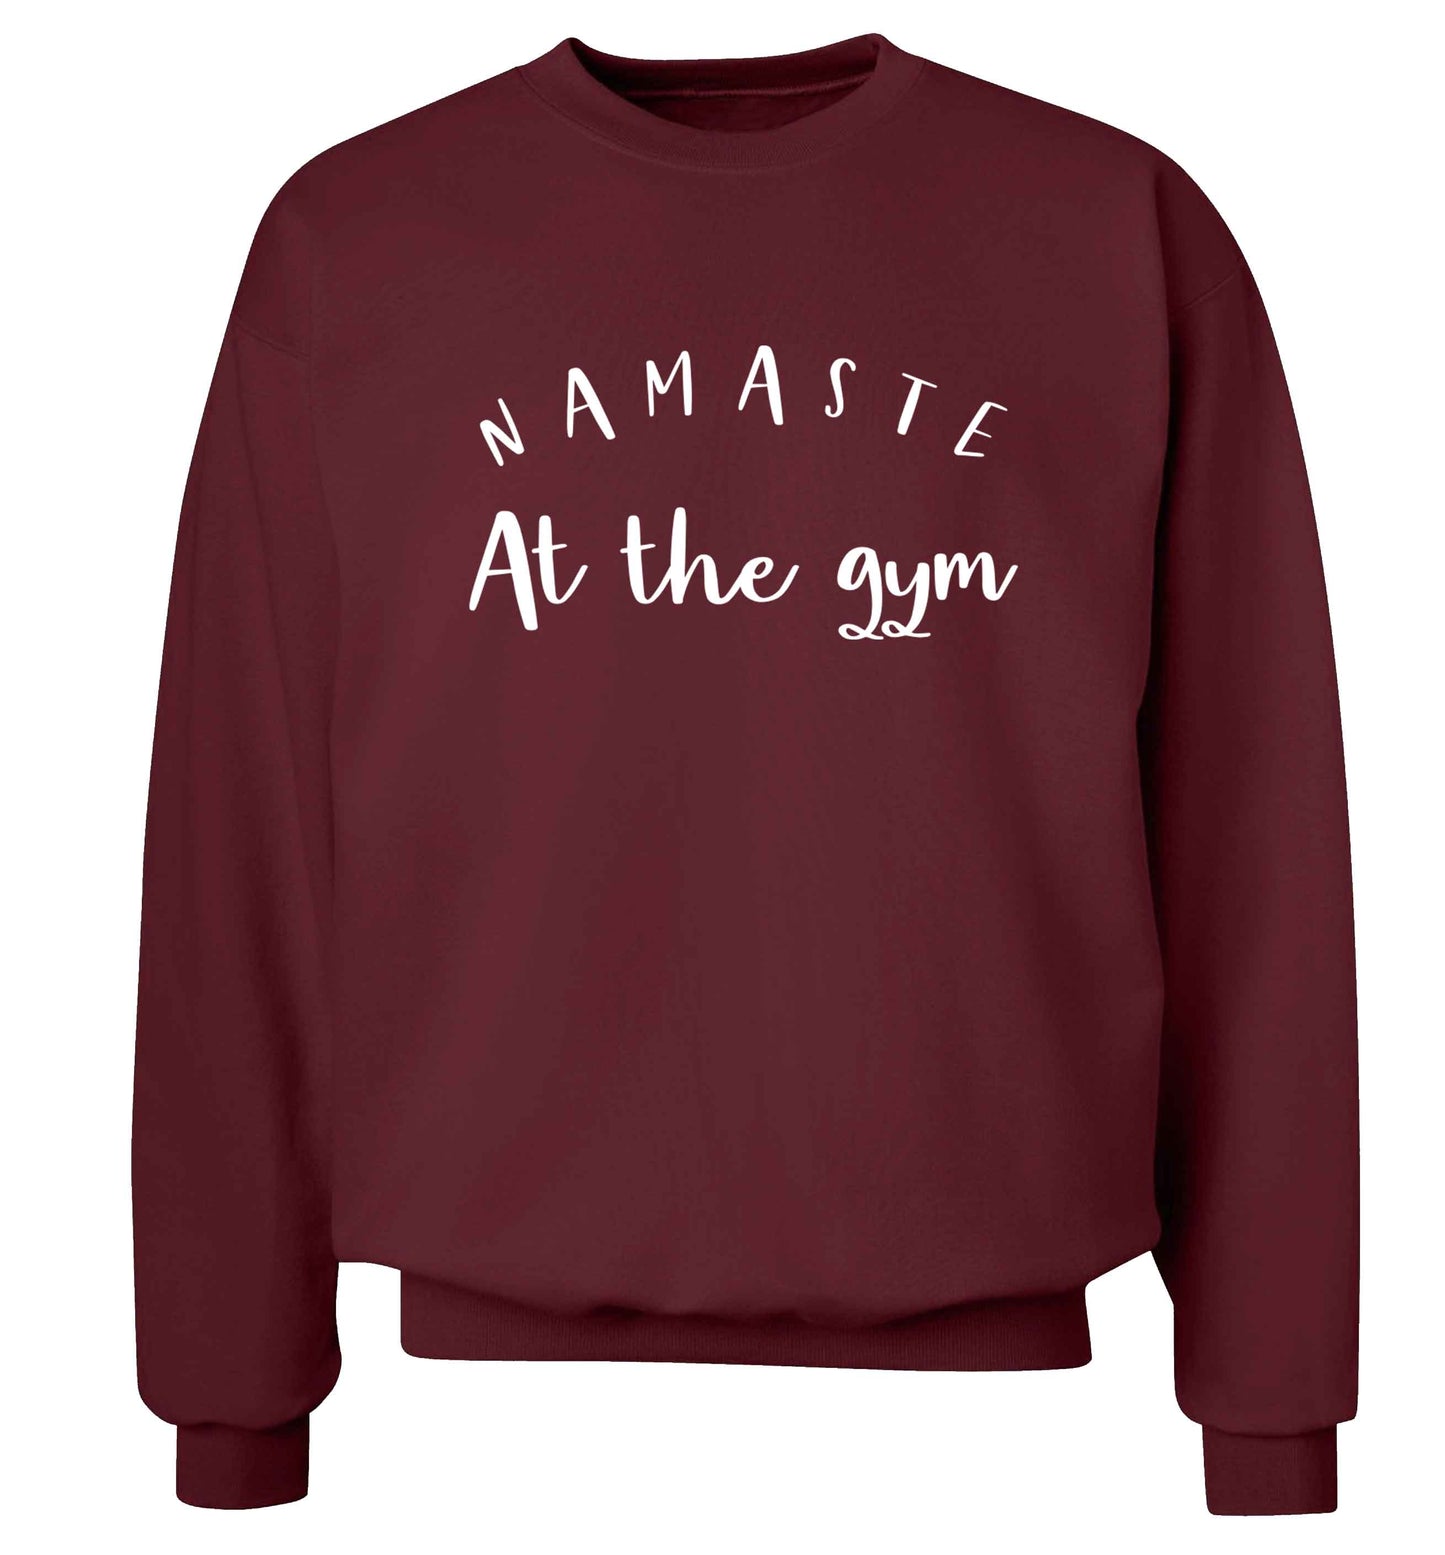 Namaste at the gym Adult's unisex maroon Sweater 2XL